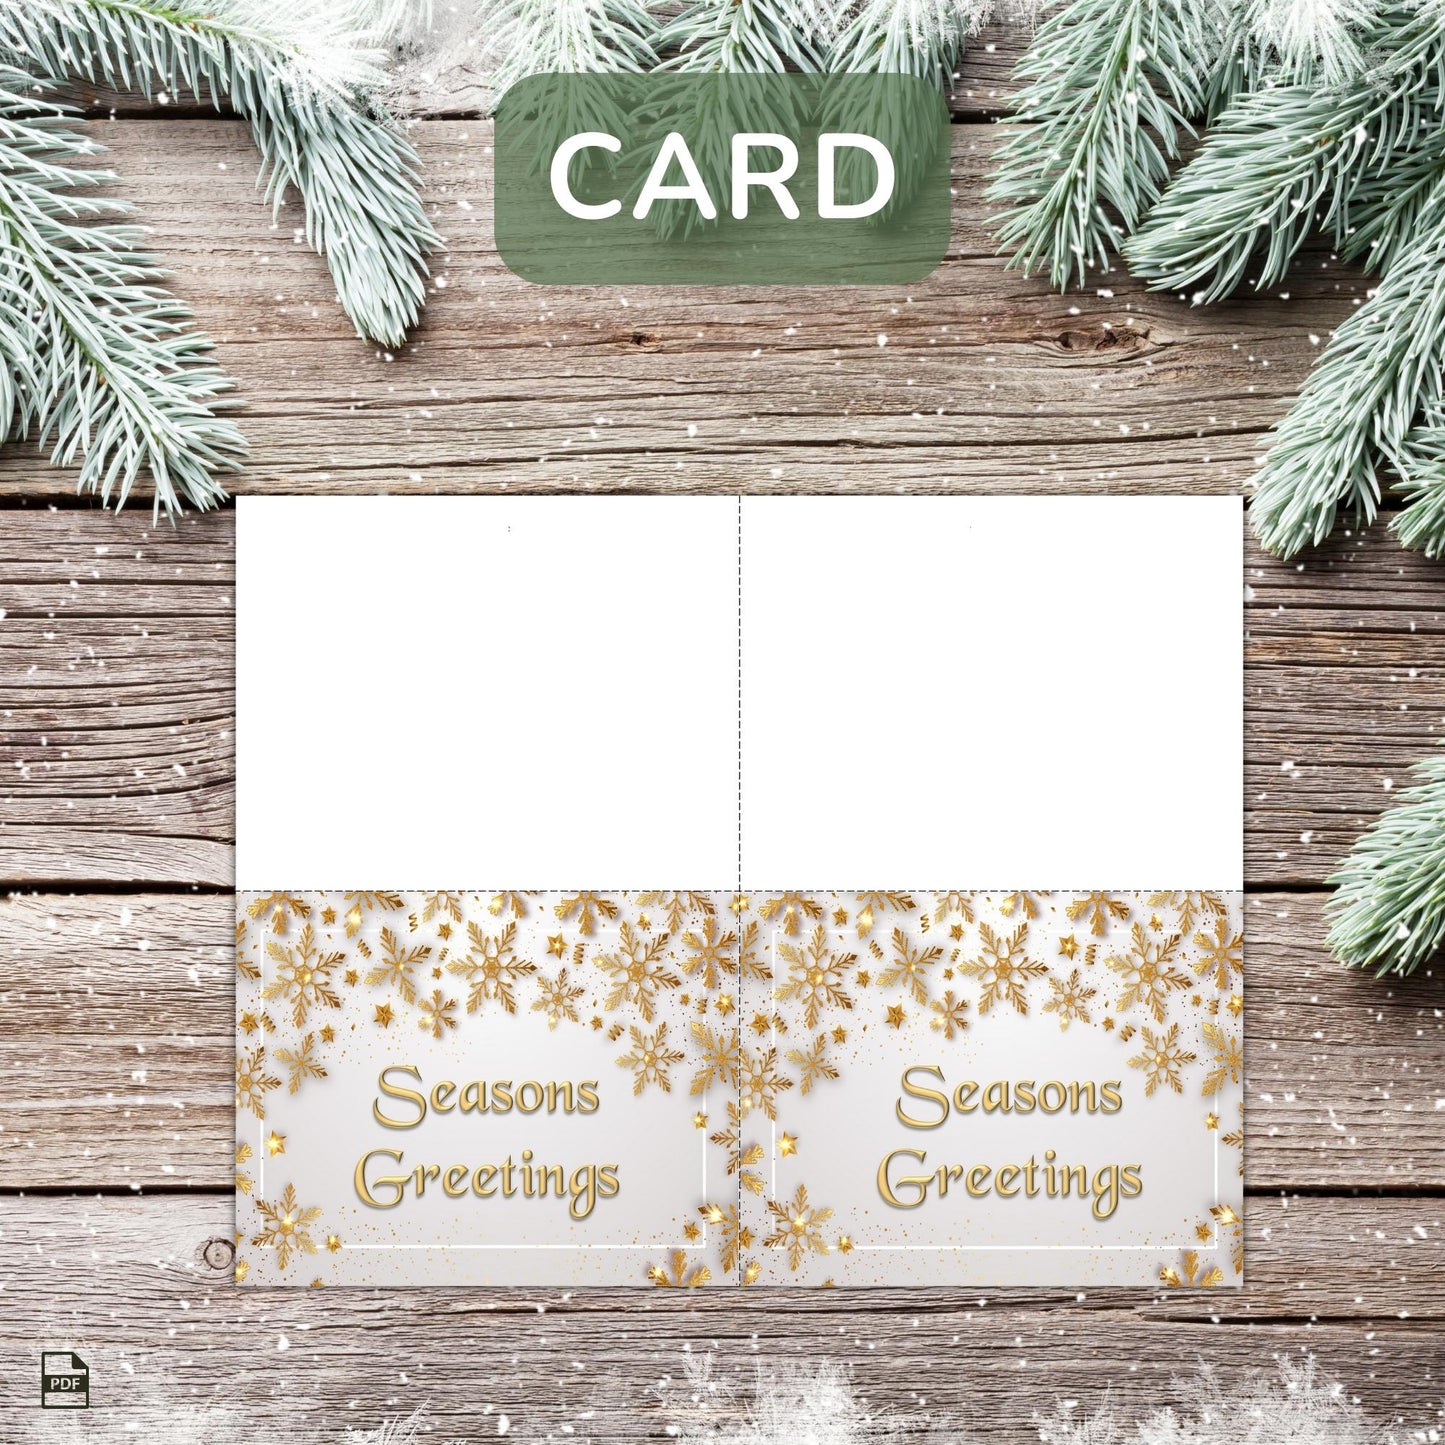 Printable Holiday Card Set - Cream Festive